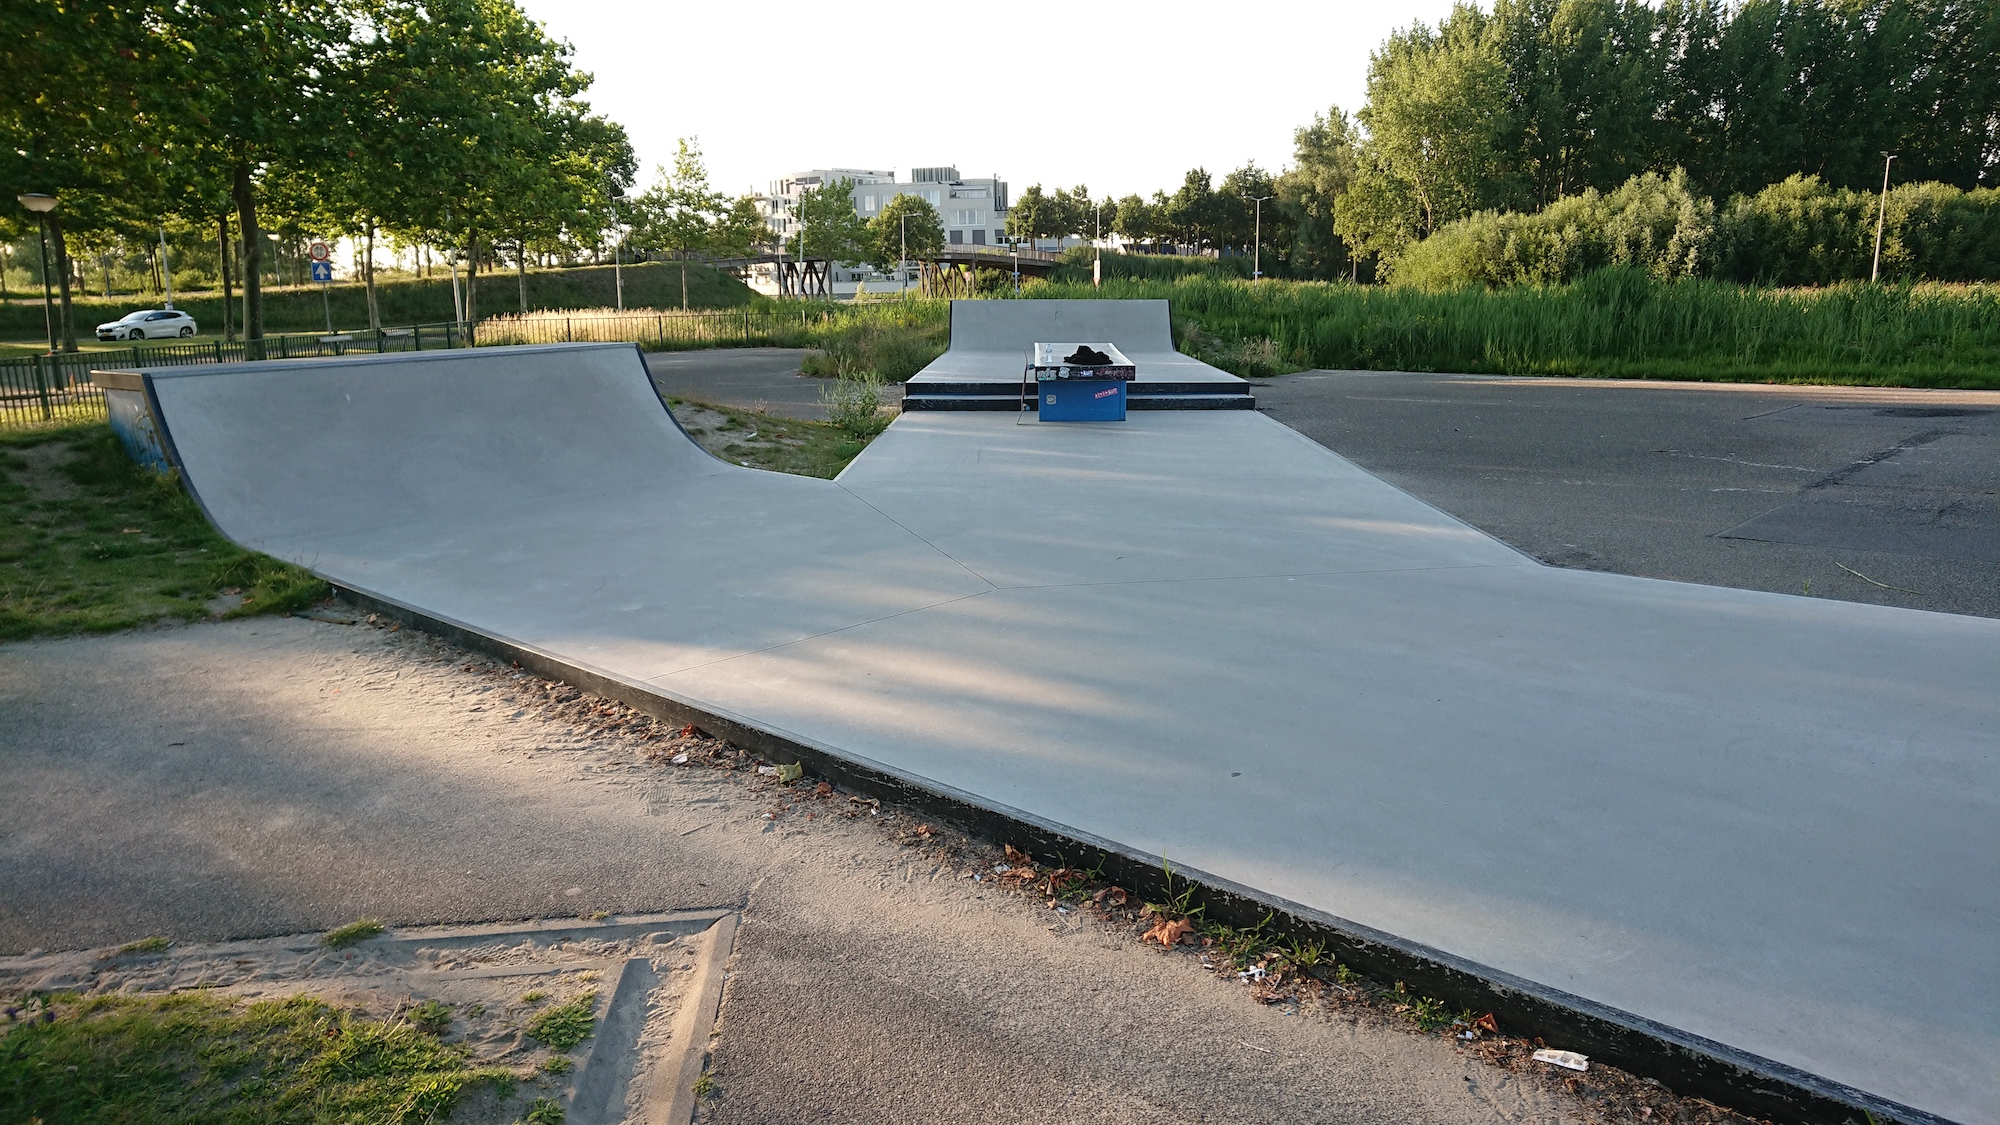 Bergen op Zoom skatepark